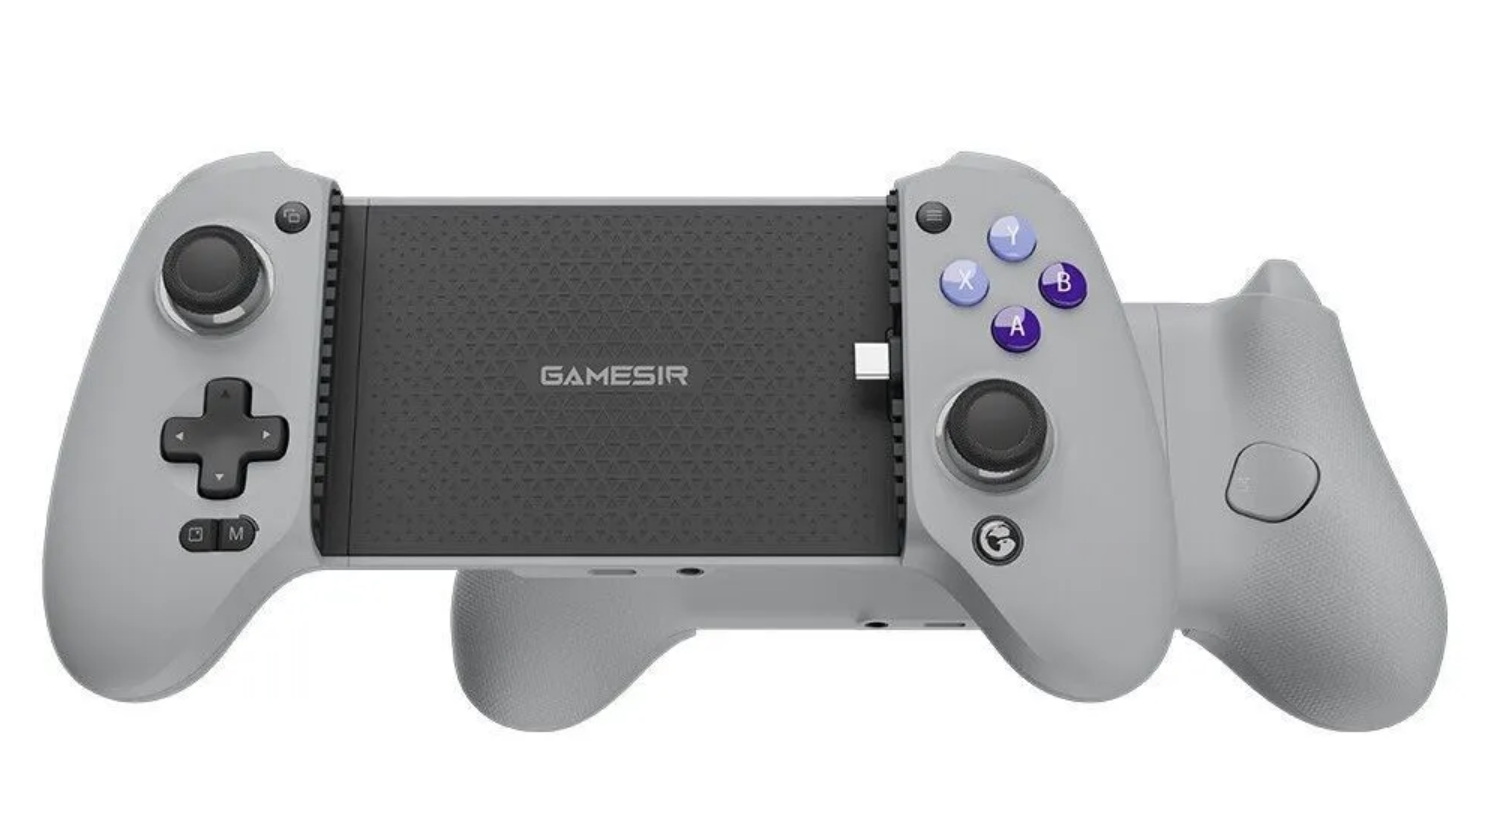 GameSir G8 Galileo Amazon listing image